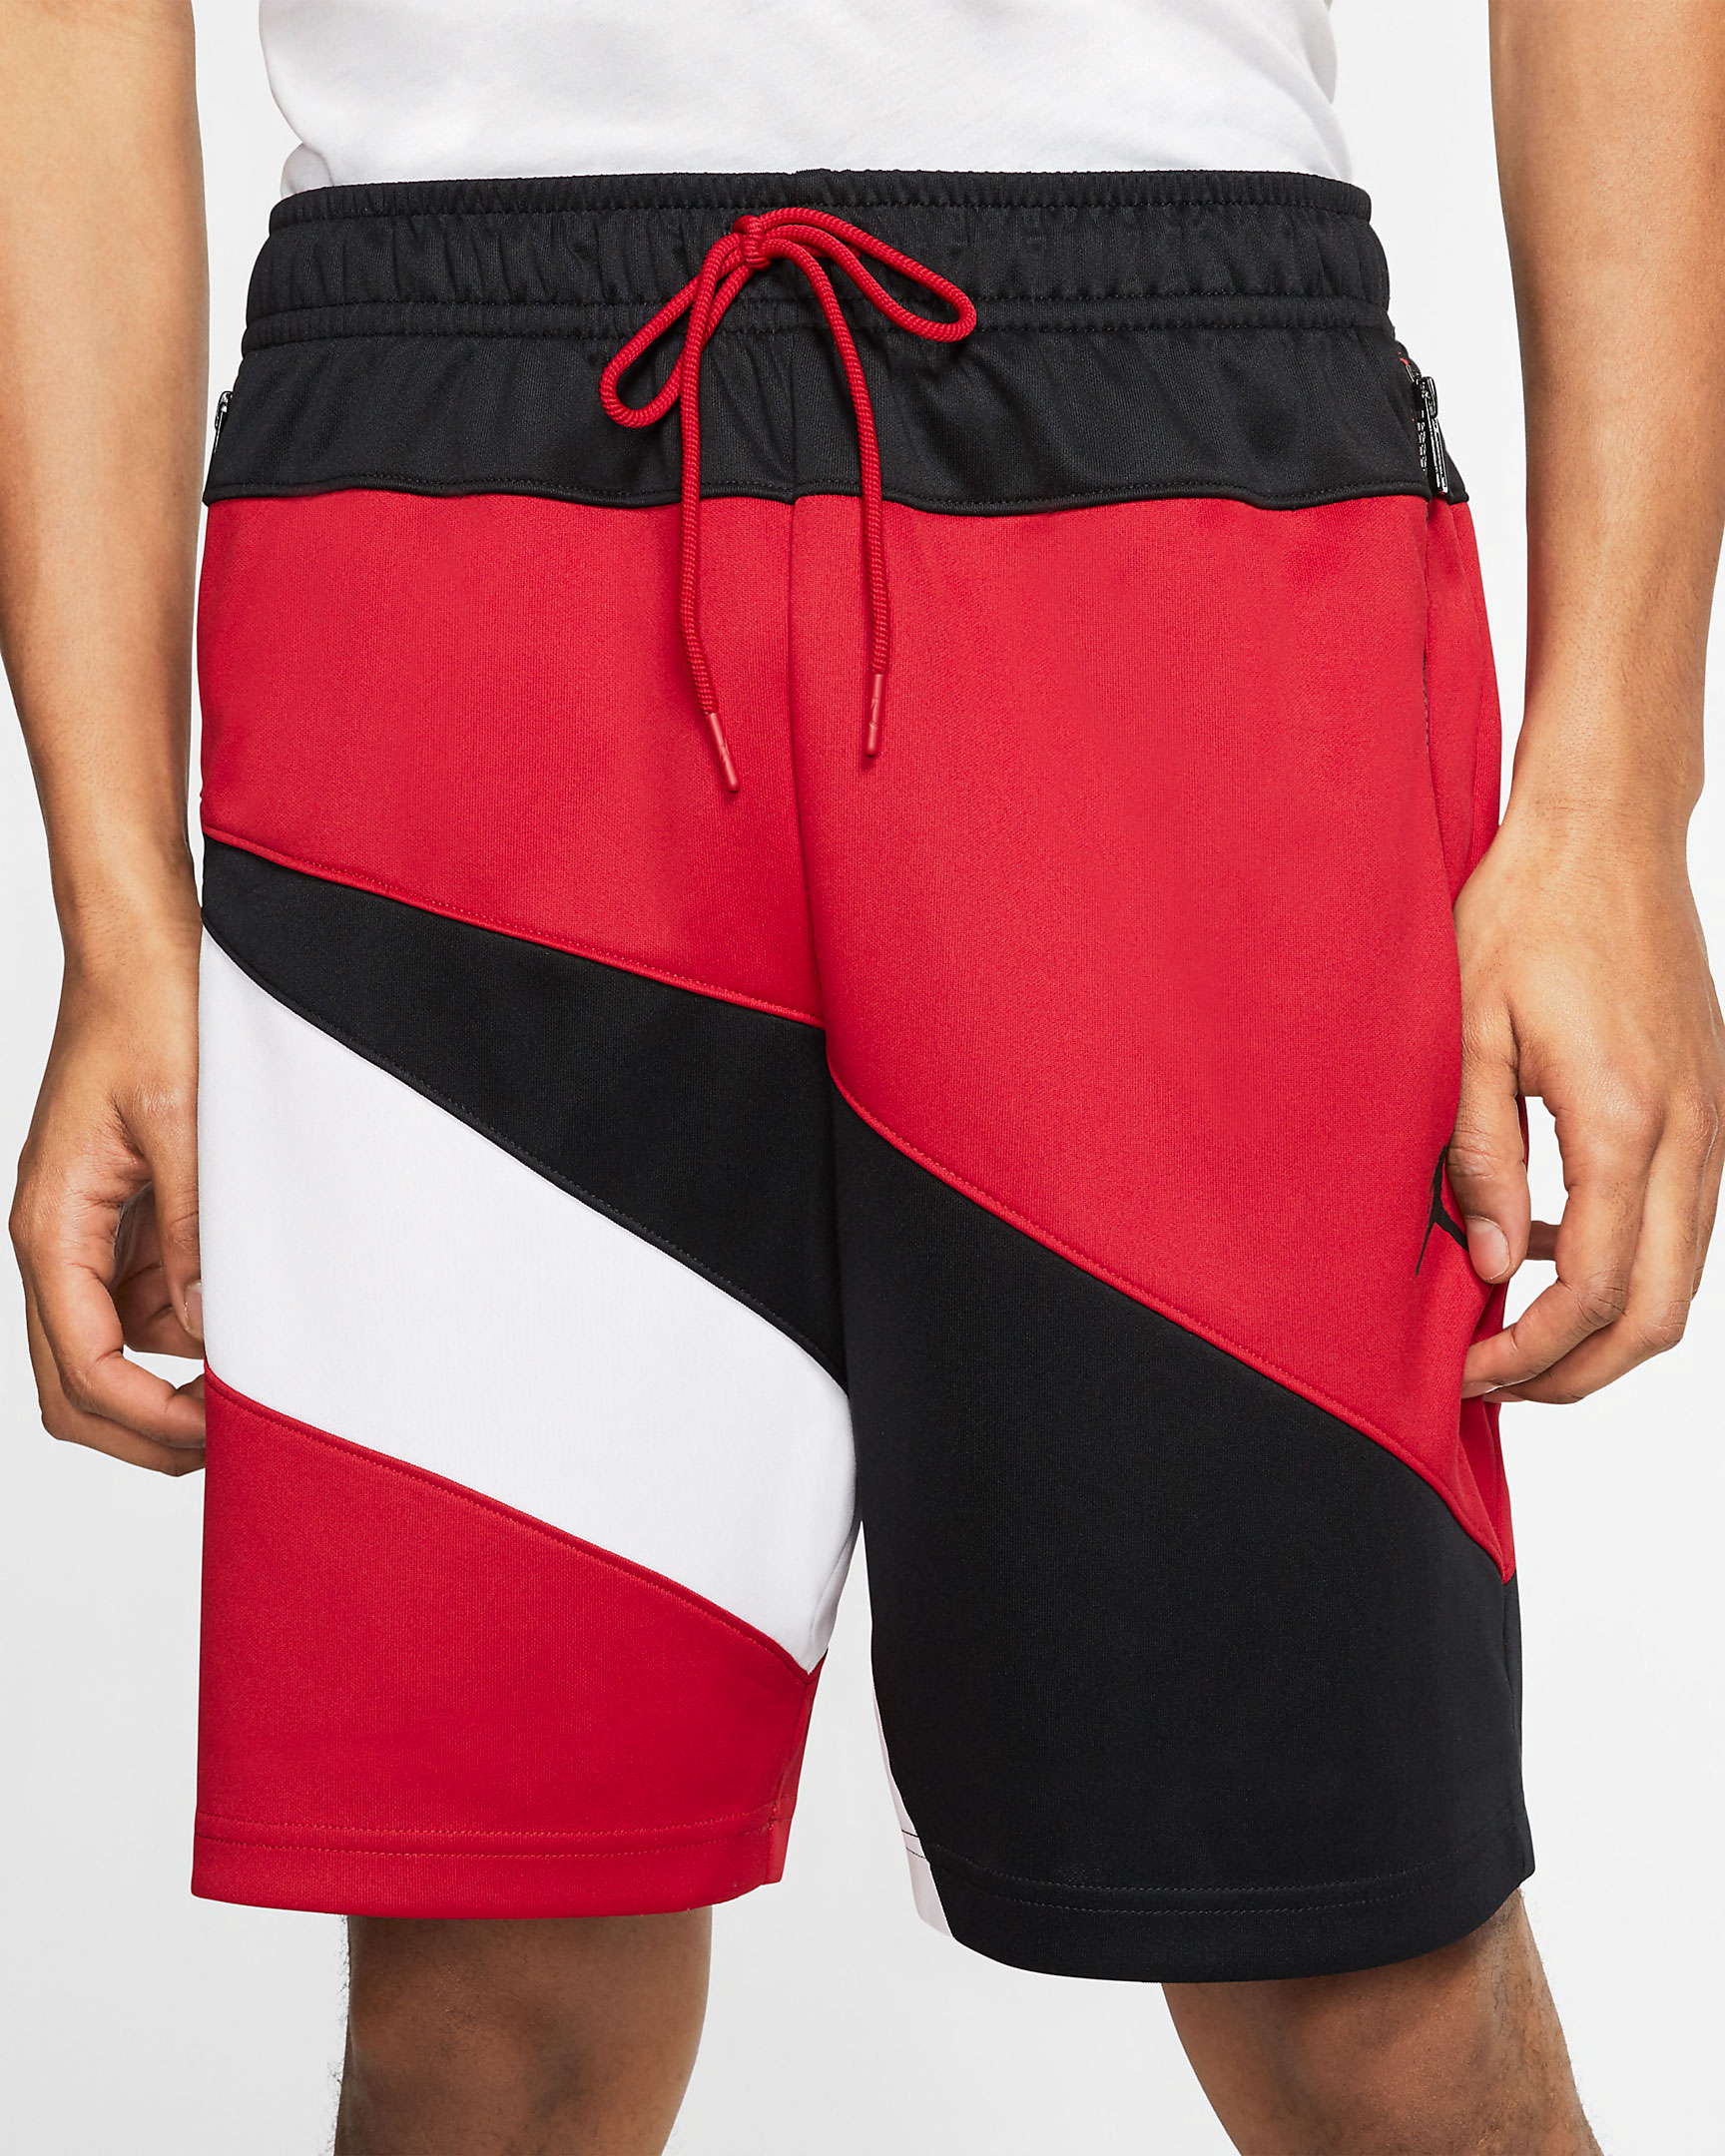 jordan-jumpman-wave-shorts-red-black-white-1